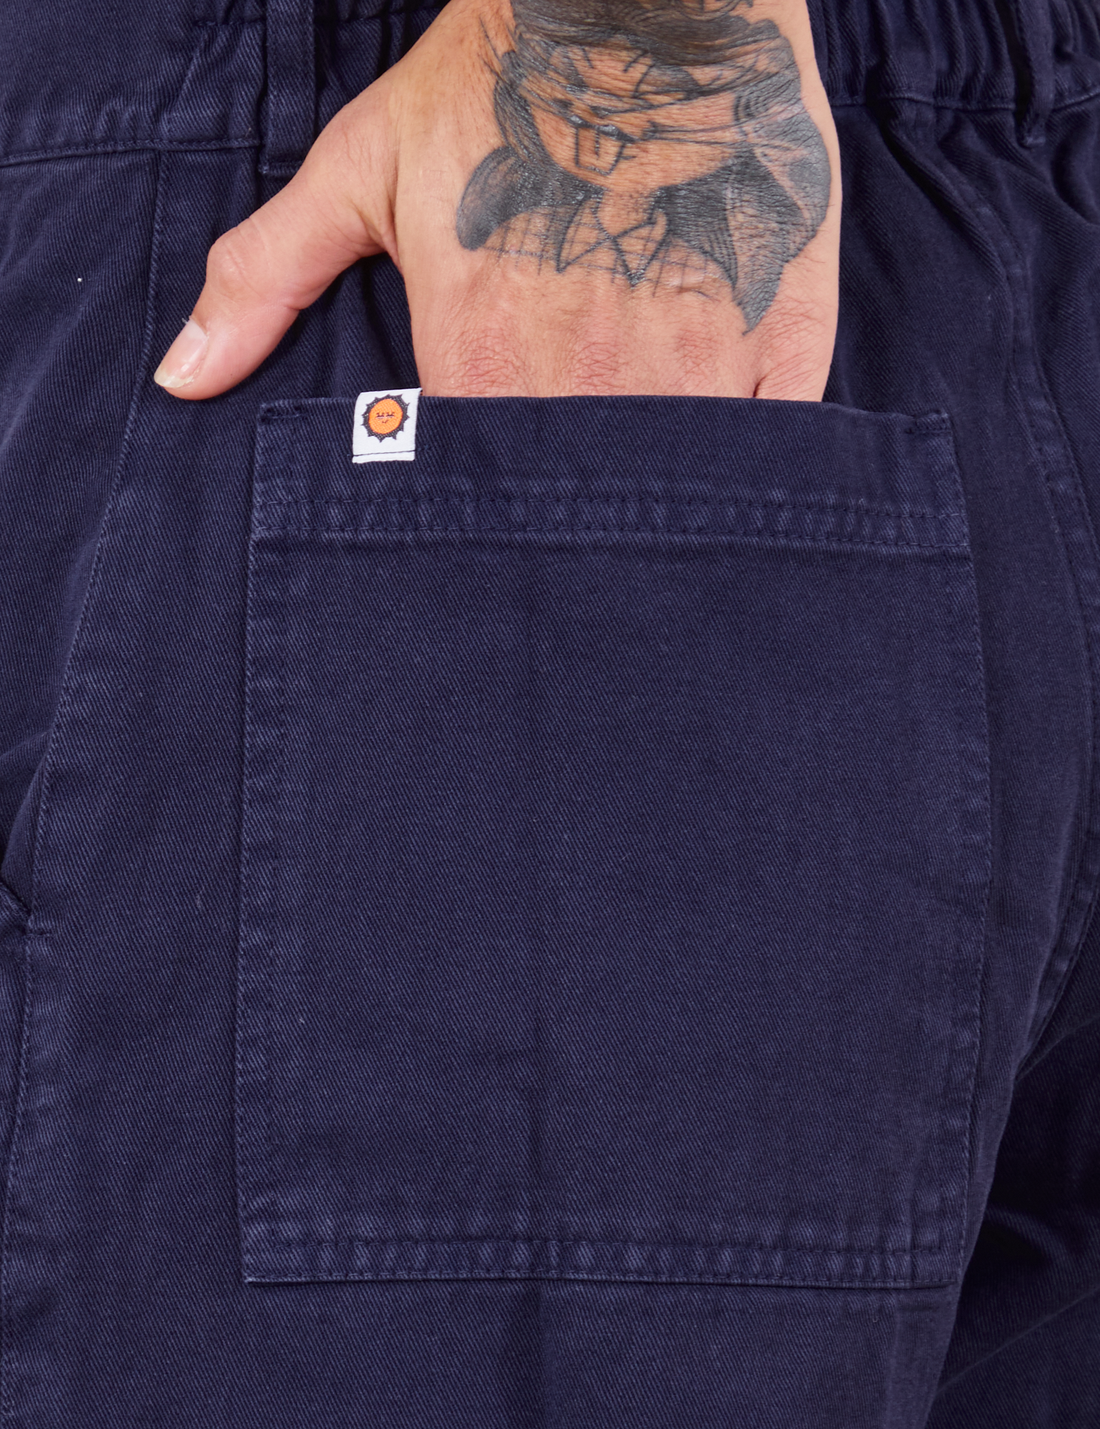 Short Sleeve Jumpsuit in Navy Blue hand in back pocket